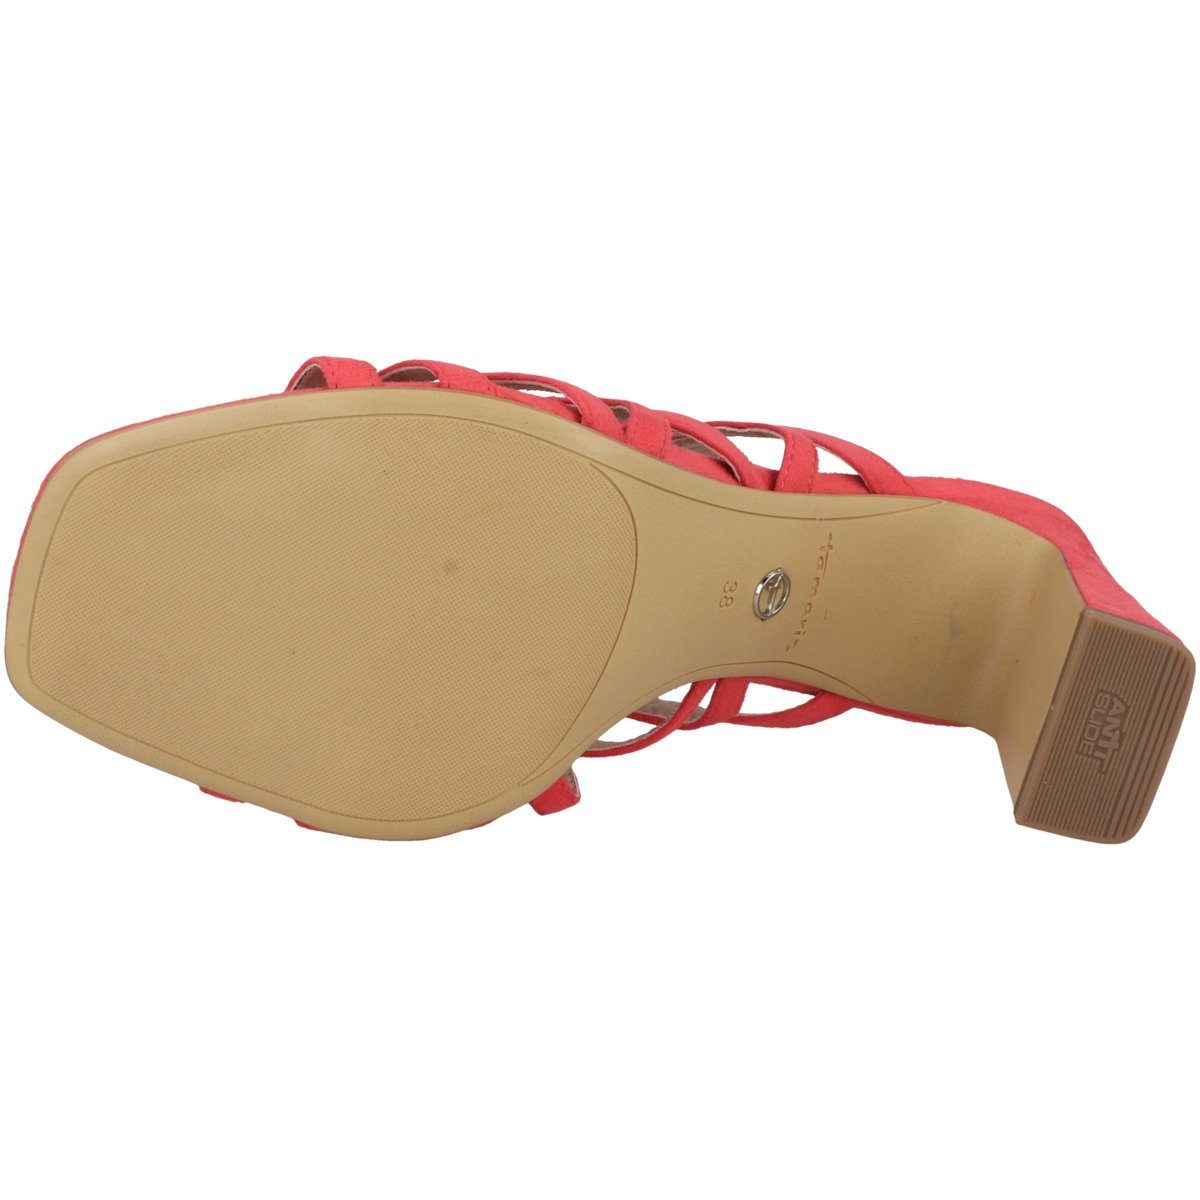 Merkmale besonderen Sandalette keine pink Tamaris Damen 1-28391-20